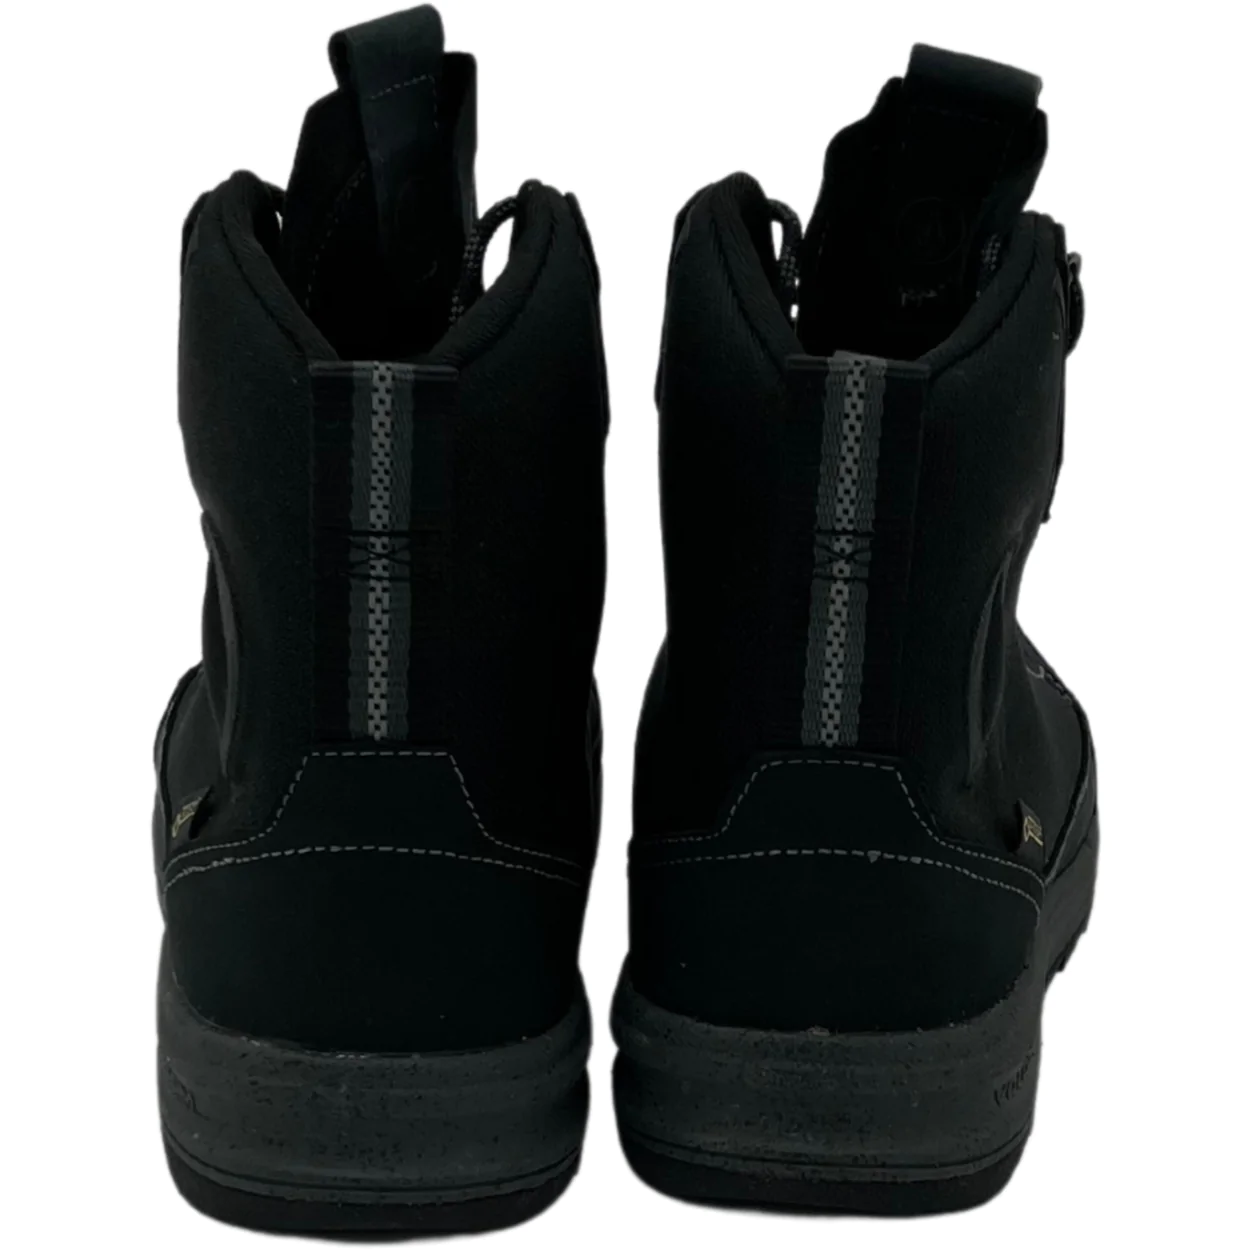 Volcom Men's Winter Boots / Roughington GTX / Black / Size 6.5